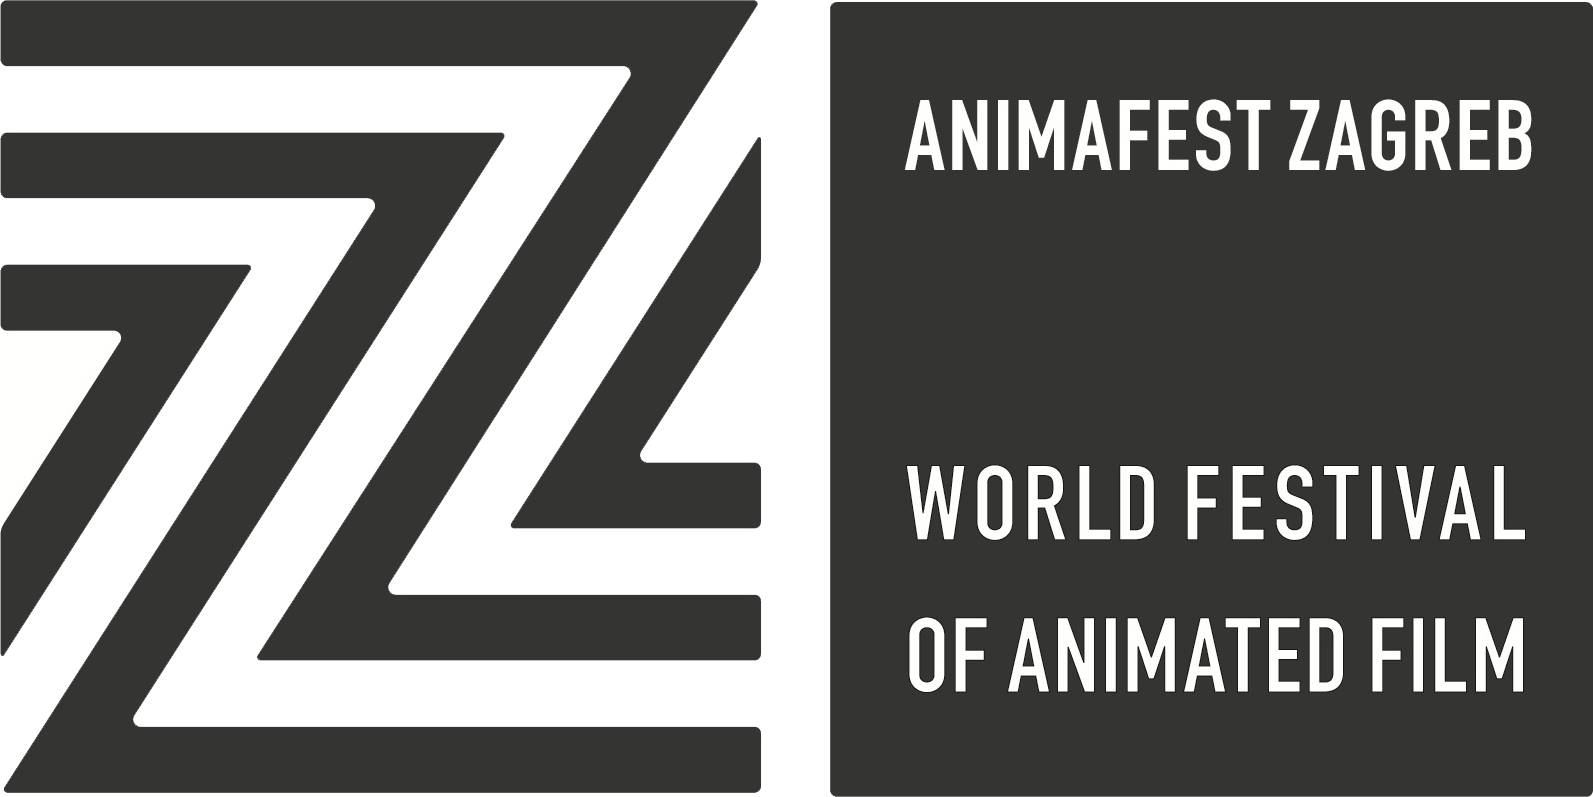 Animafest Zagreb World Festival of Animated Film